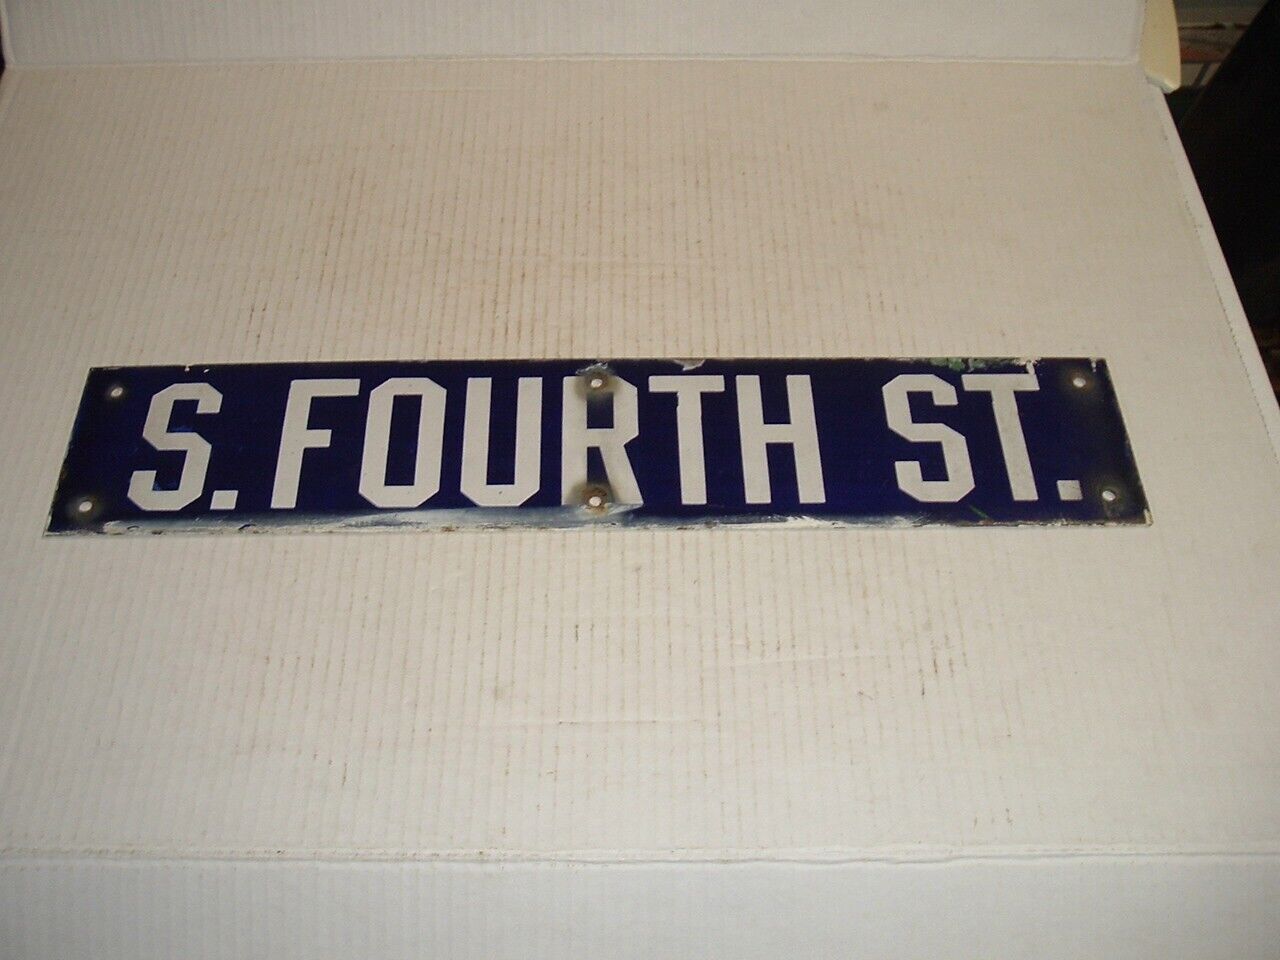 Vintage Porcelain Street Sign S. Fourth St. Newport Pennsylvania